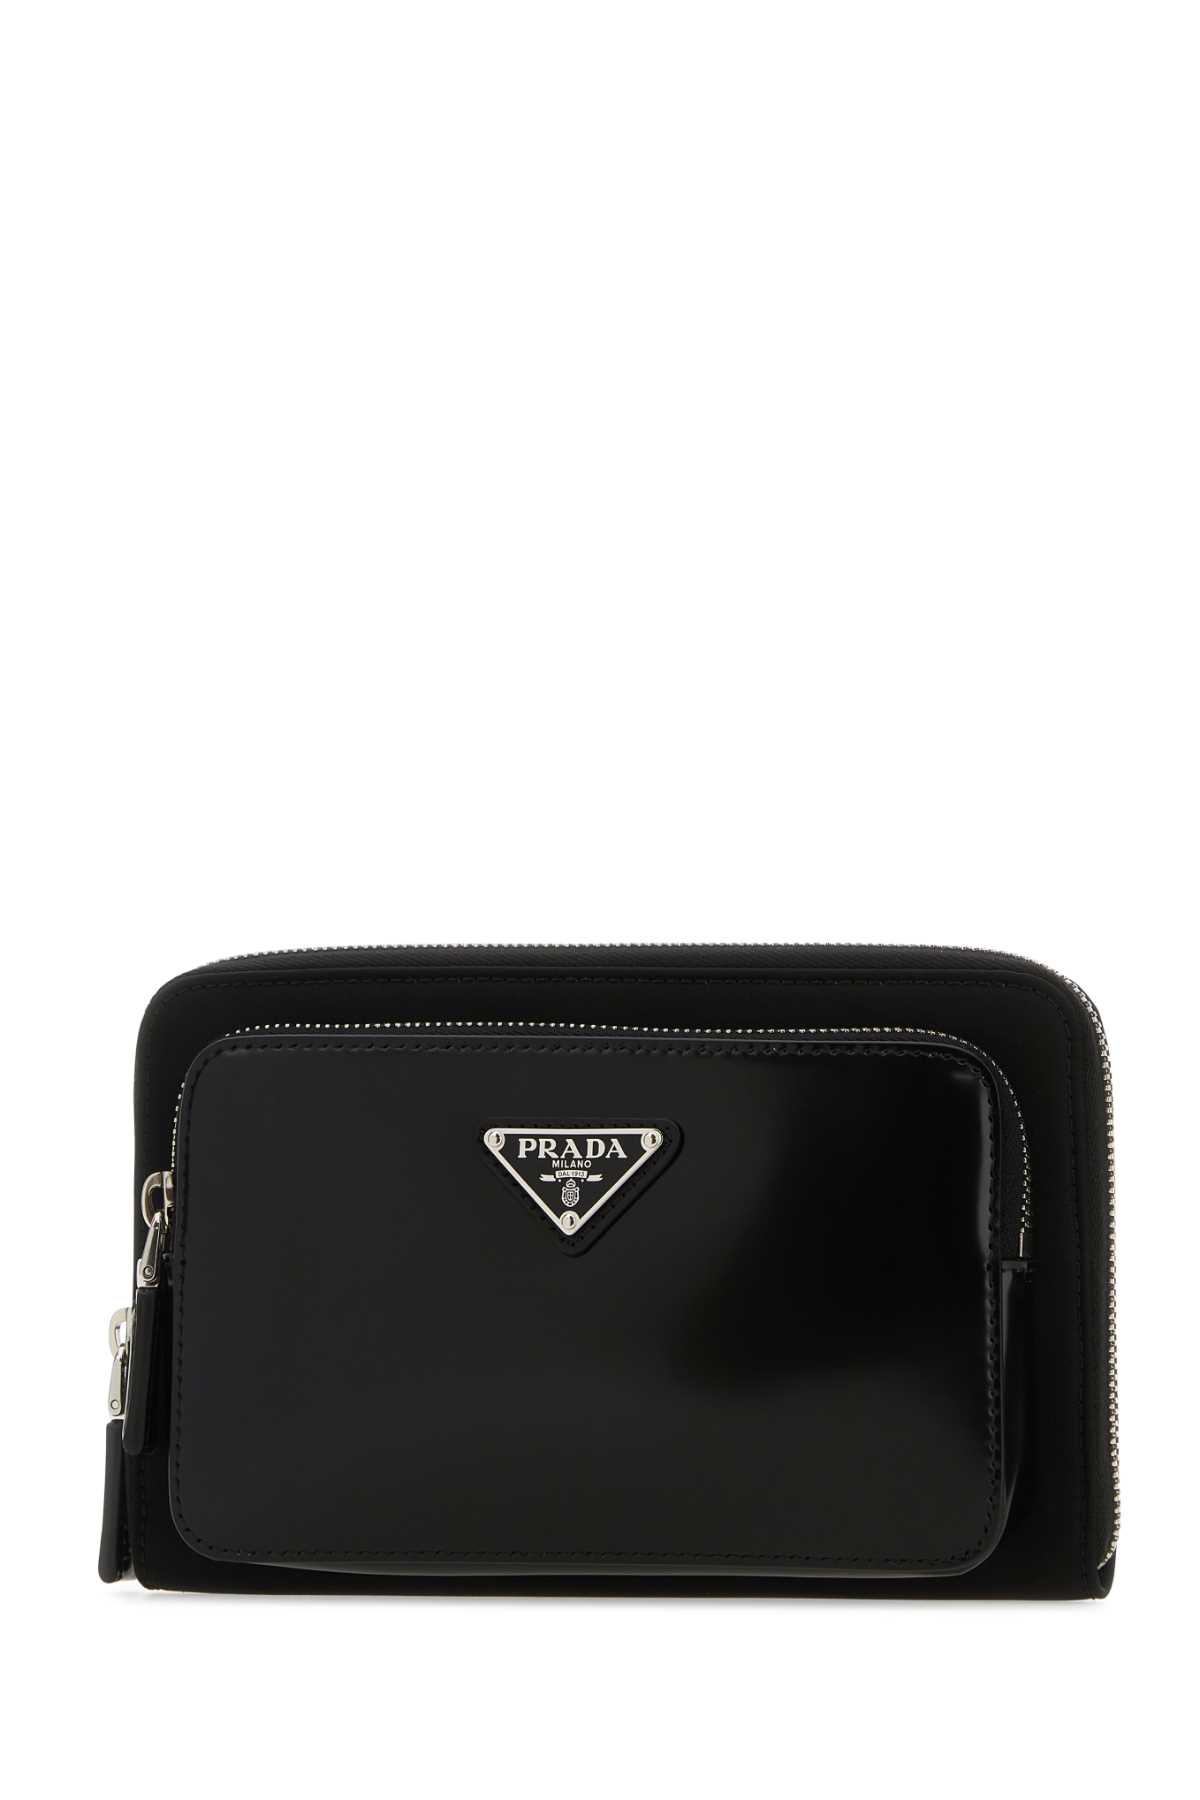 Prada Black Leather And Re-nylon Belt Bag In Nero